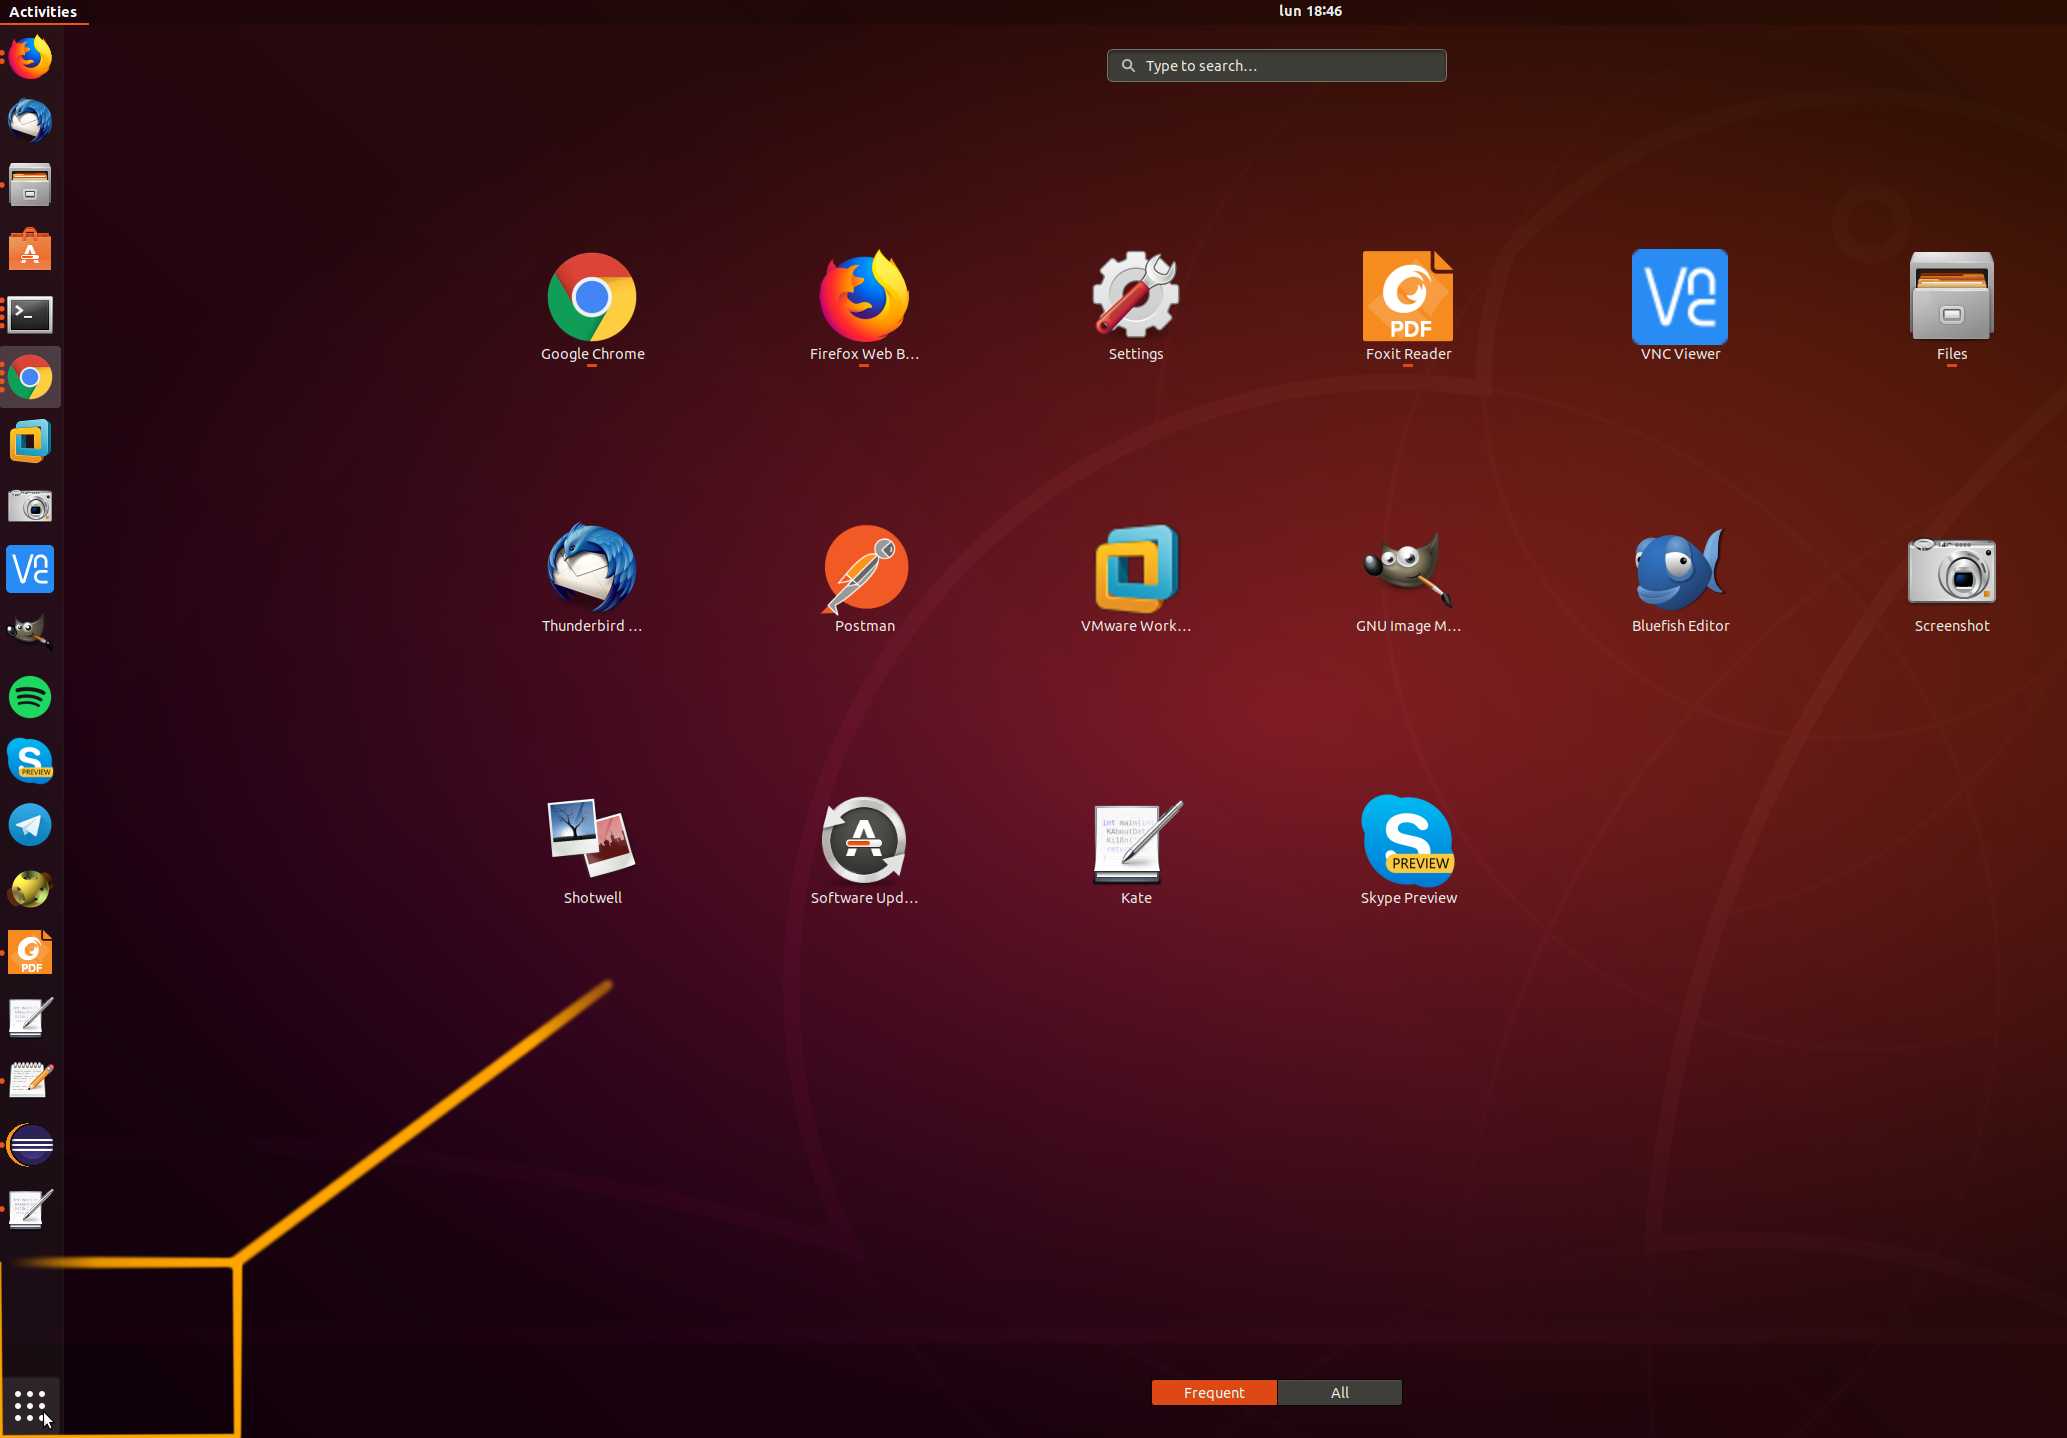 How to Install Ubuntu 18.04 Bionic Alongside Windows 10 - Ubuntu 18.04 Bionic Desktop